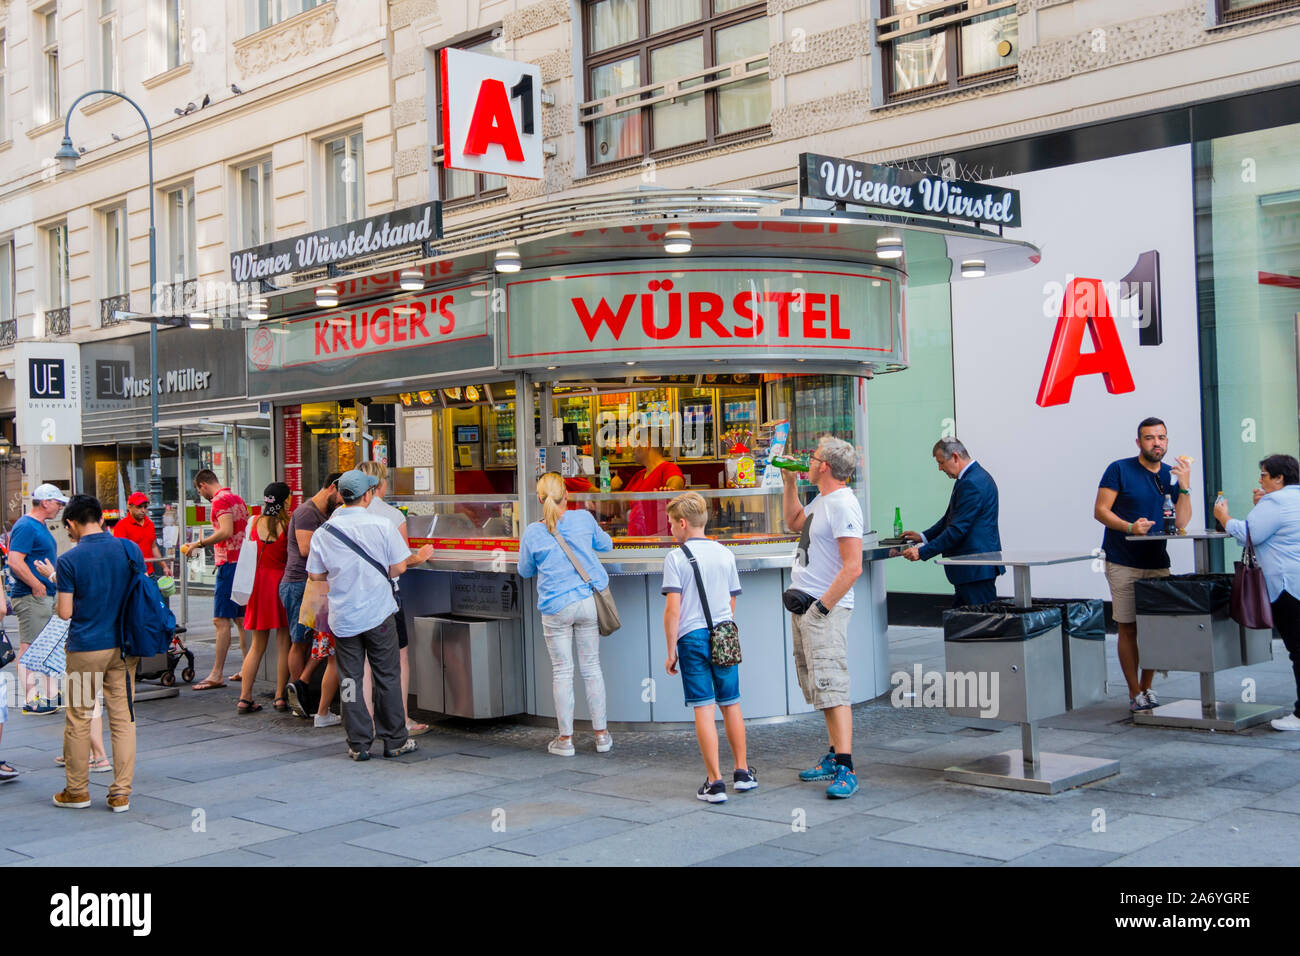 Wiener Würstel, Würstchenbude, Kärntner Straße, Altstadt, Wien, Österreich Stockfoto